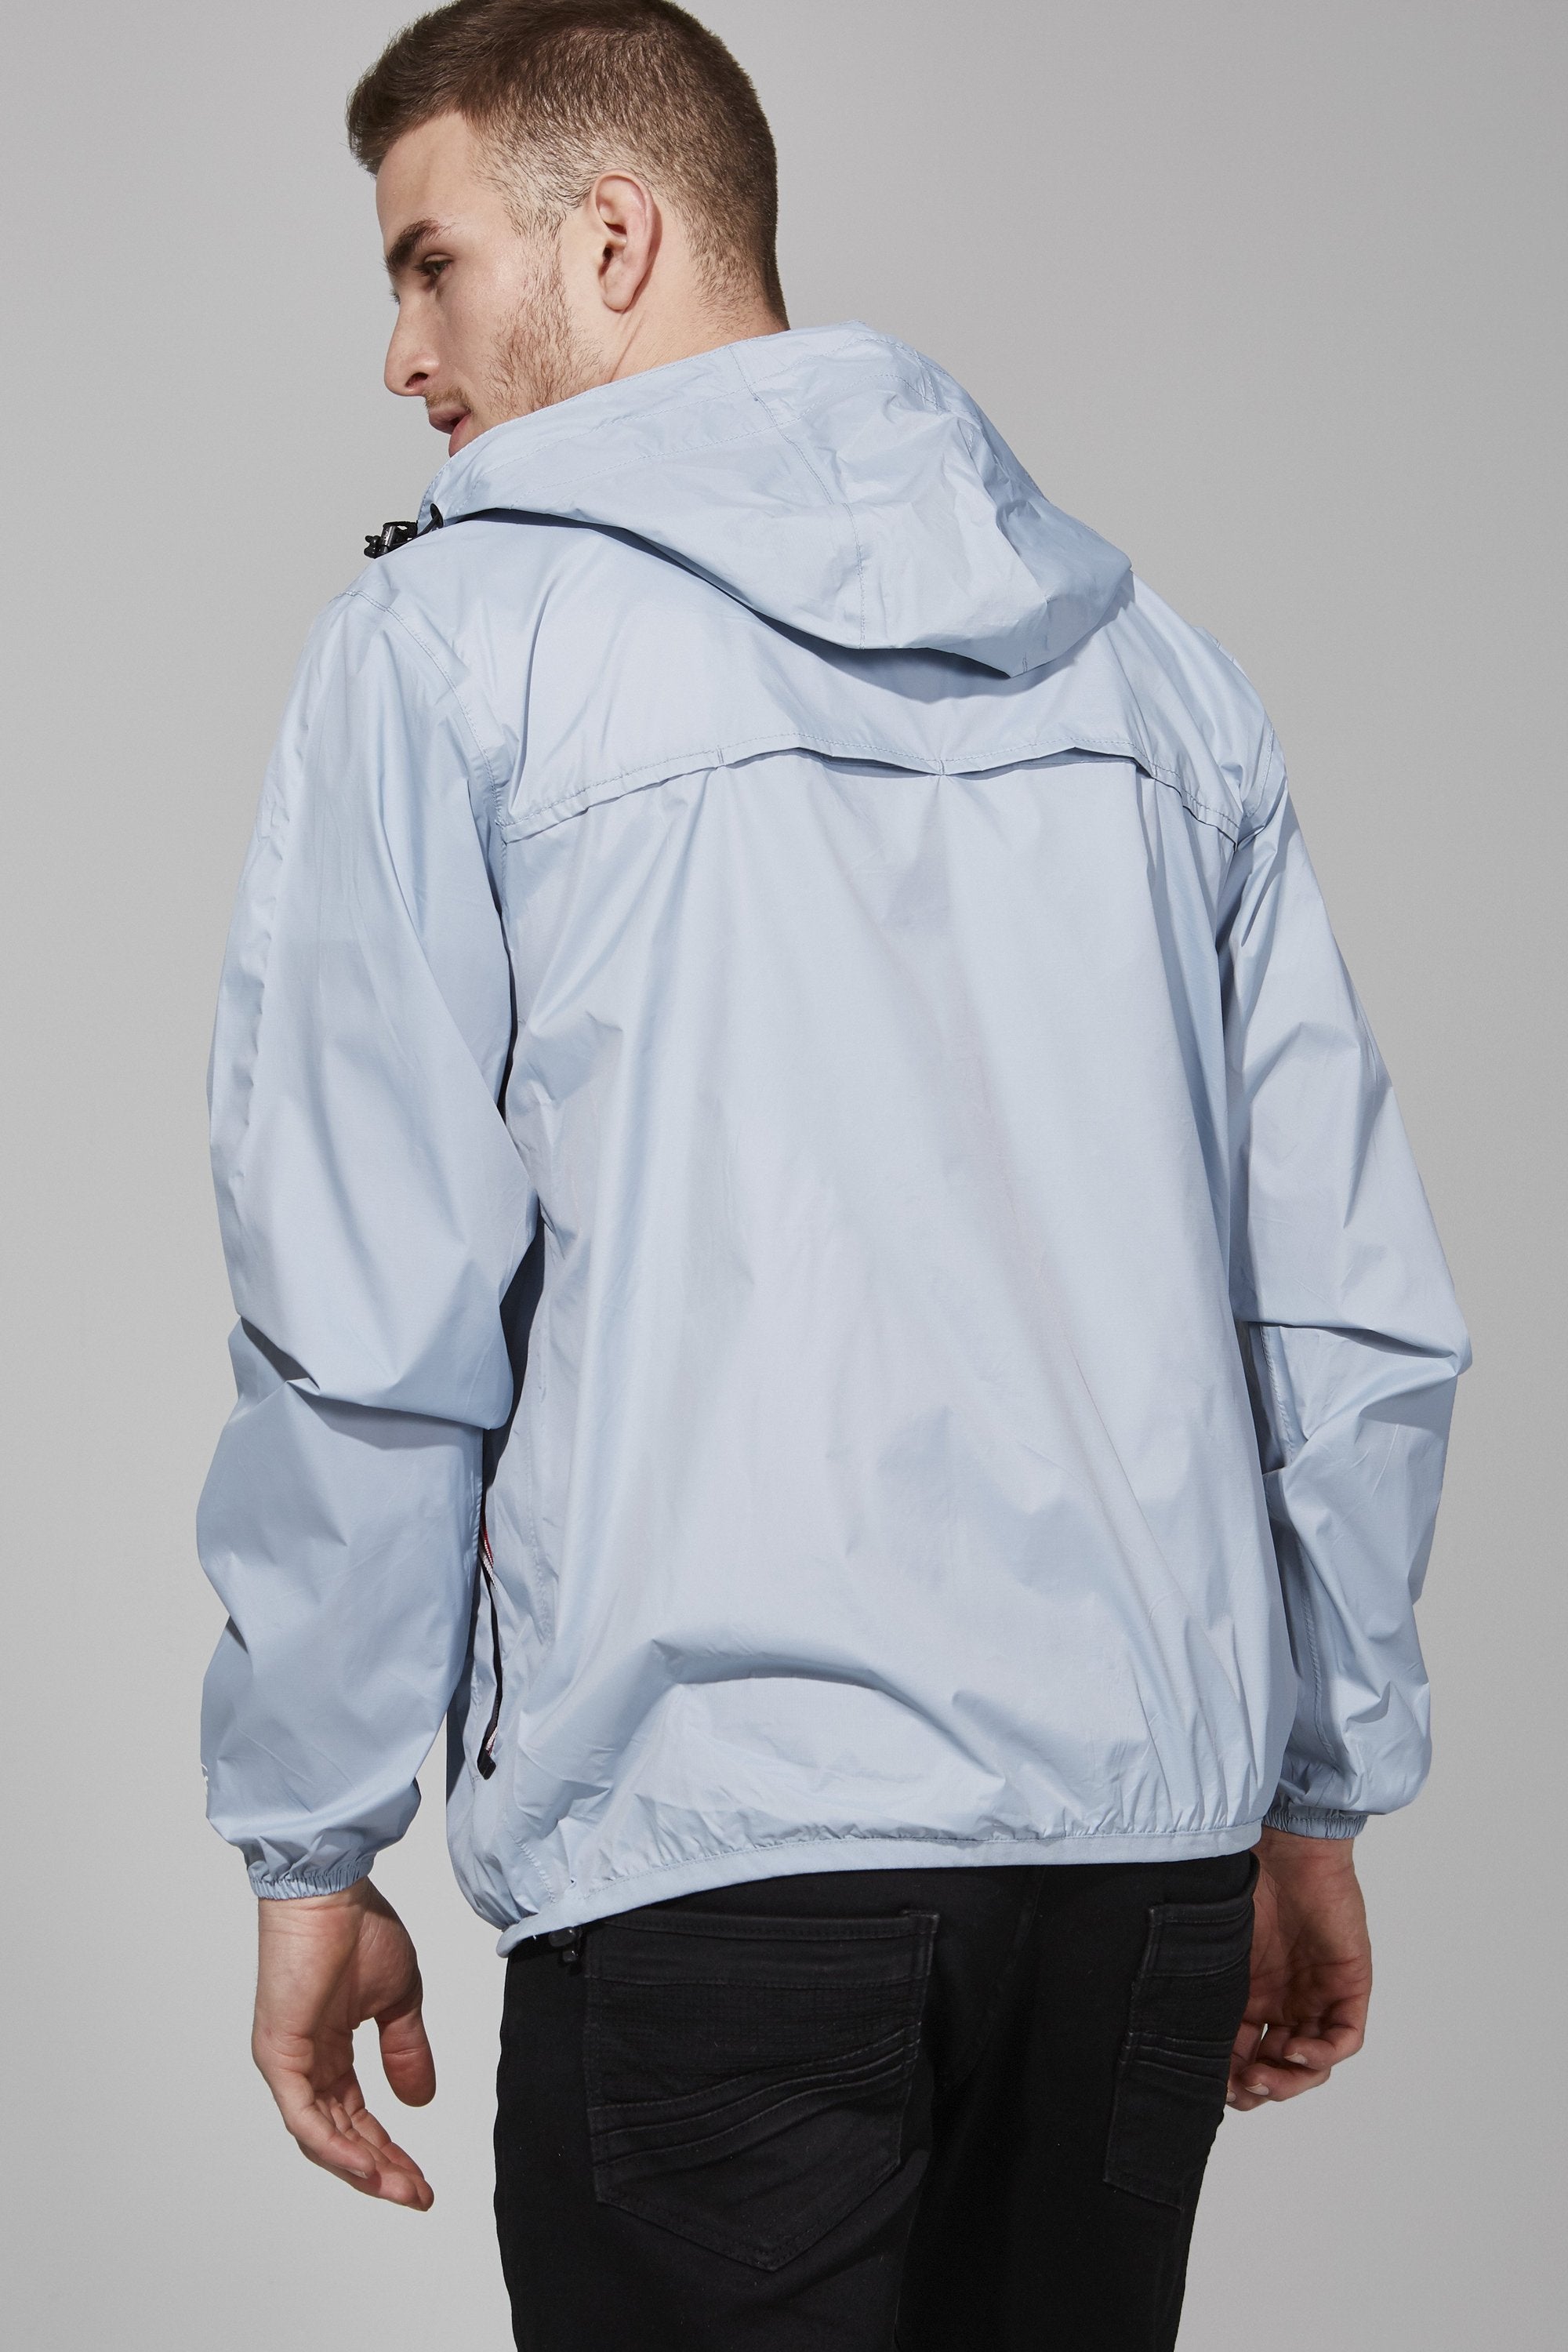 Picture of a Men's Full Zip Blue Waterproof Rain Jacket back view